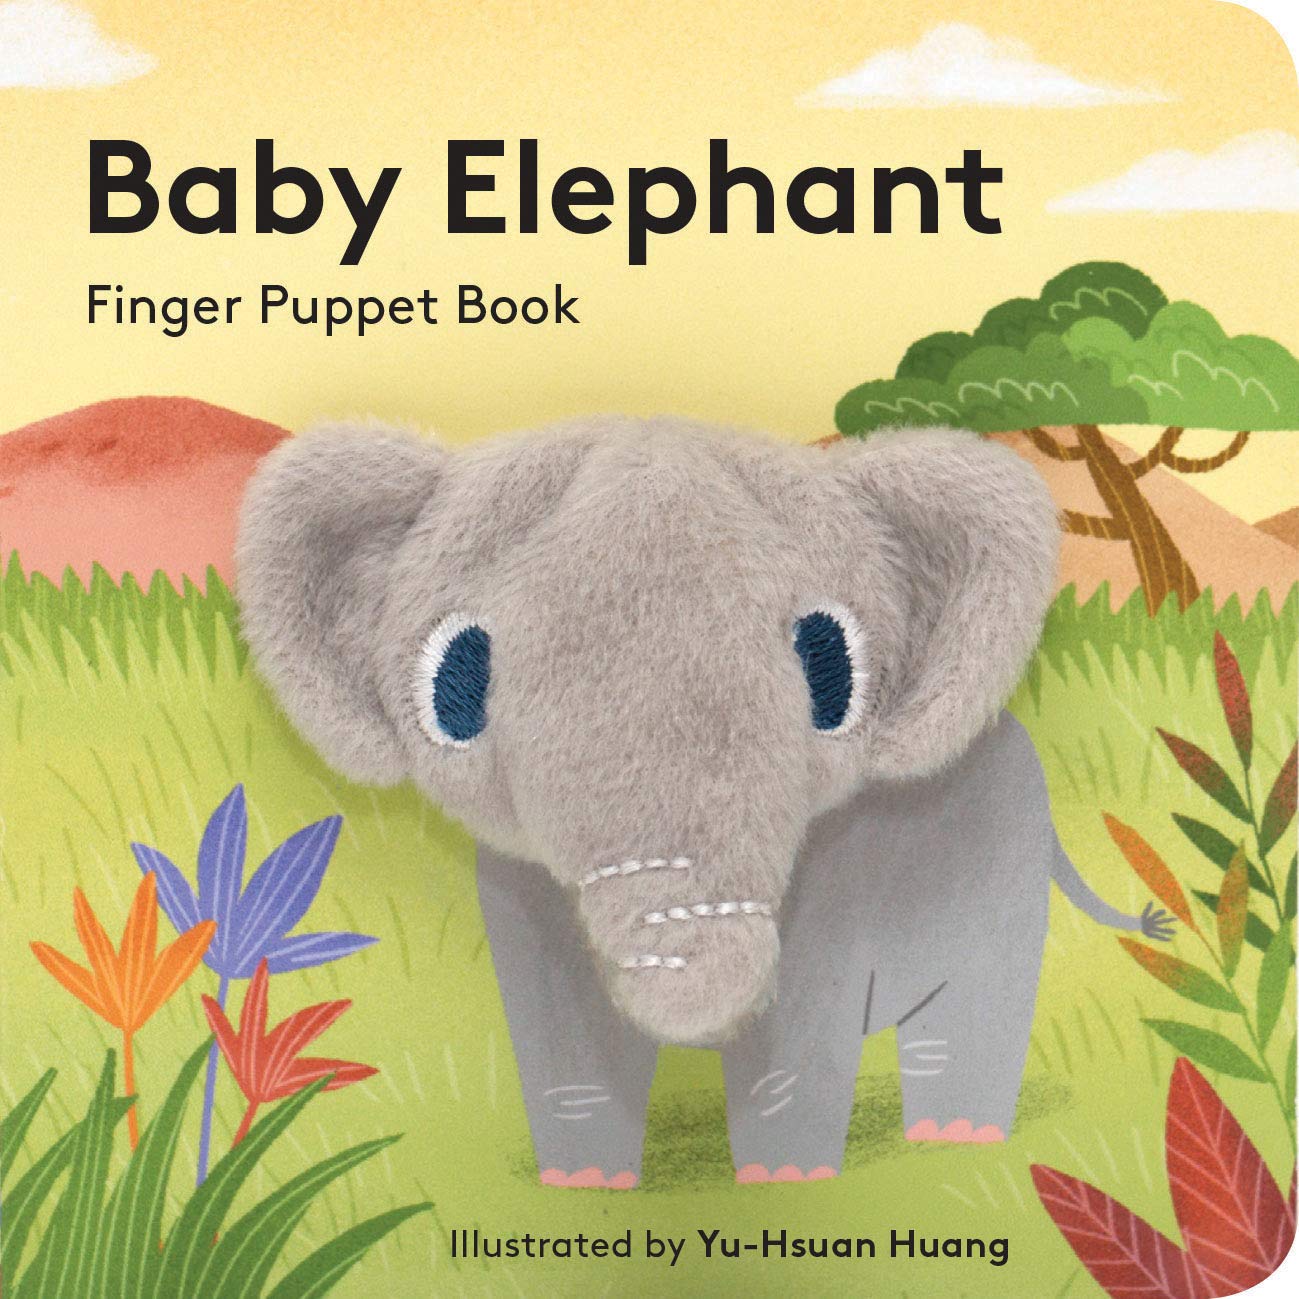 FINGER PUPPET BOOK - BABY ELEPHANT